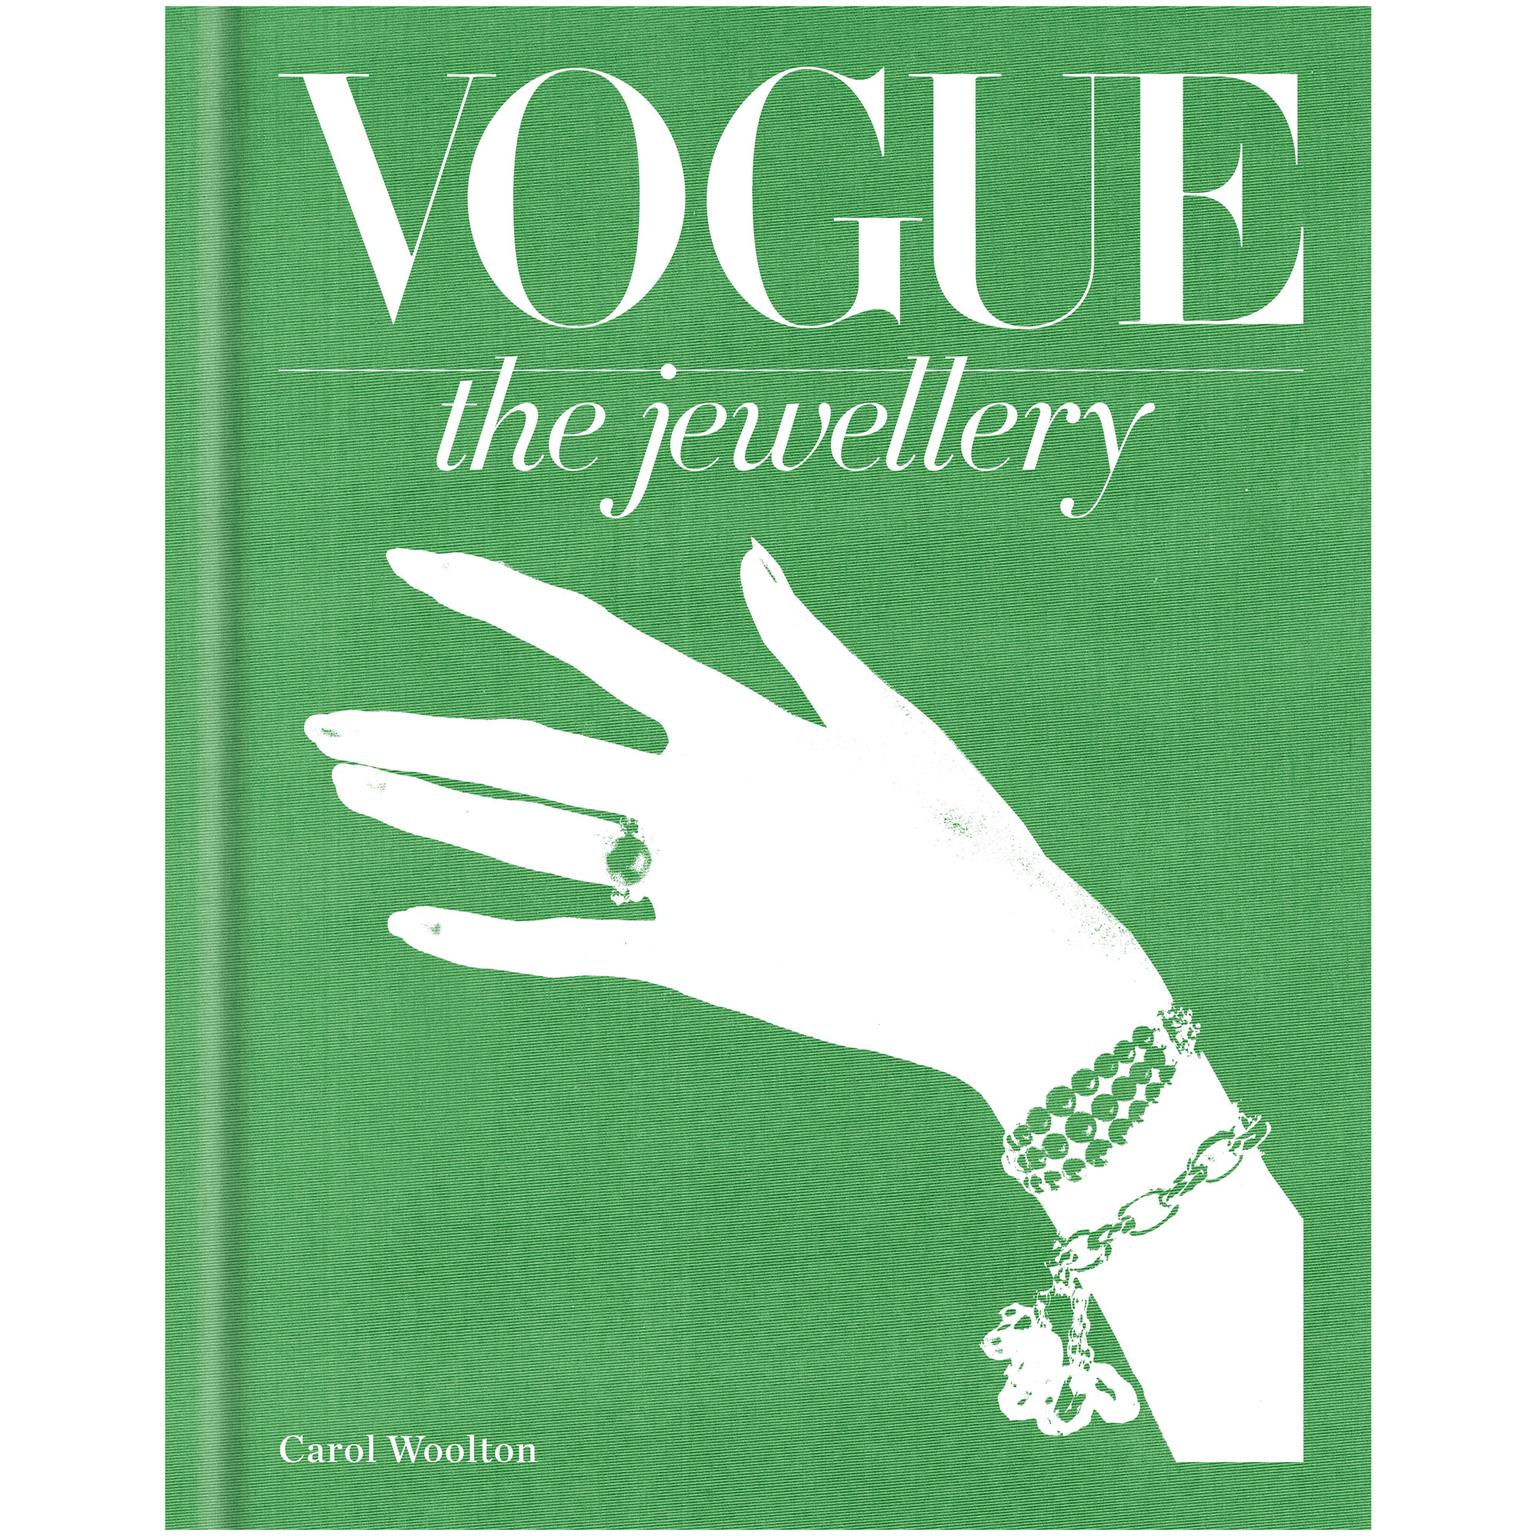 Vogue The Jewellery, Carol Woolton